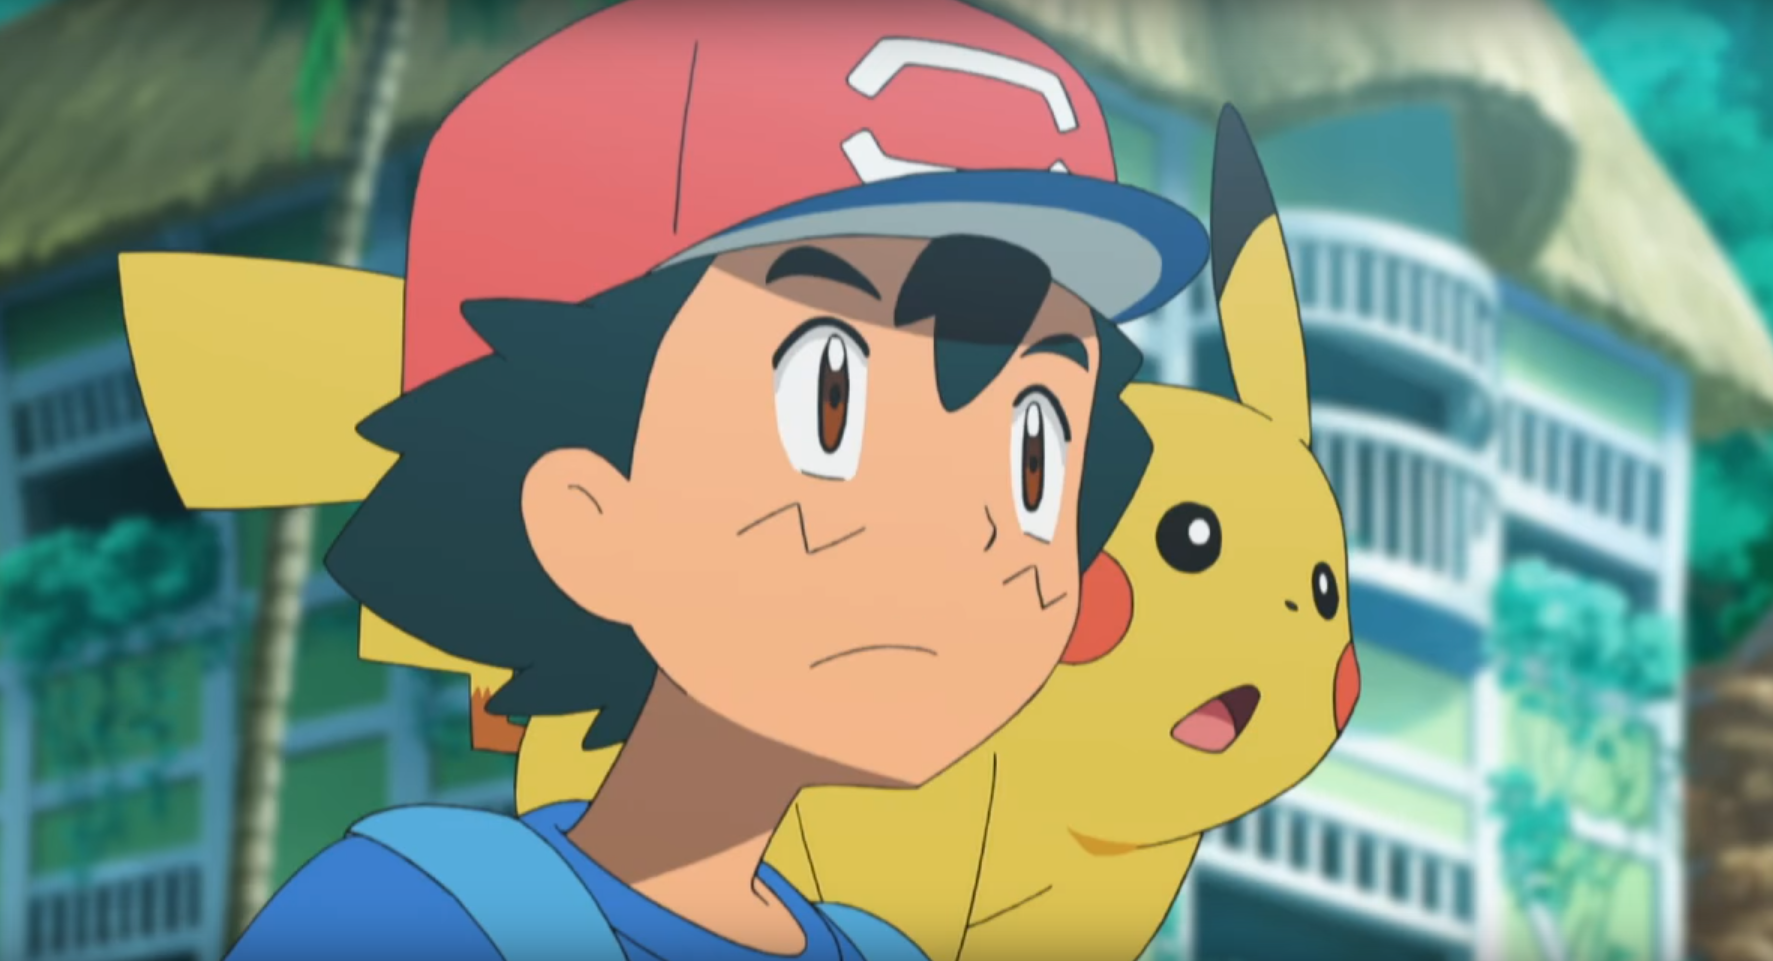 Pokémon Sol e Lua: Ultra aventuras - Trailer Dublado 